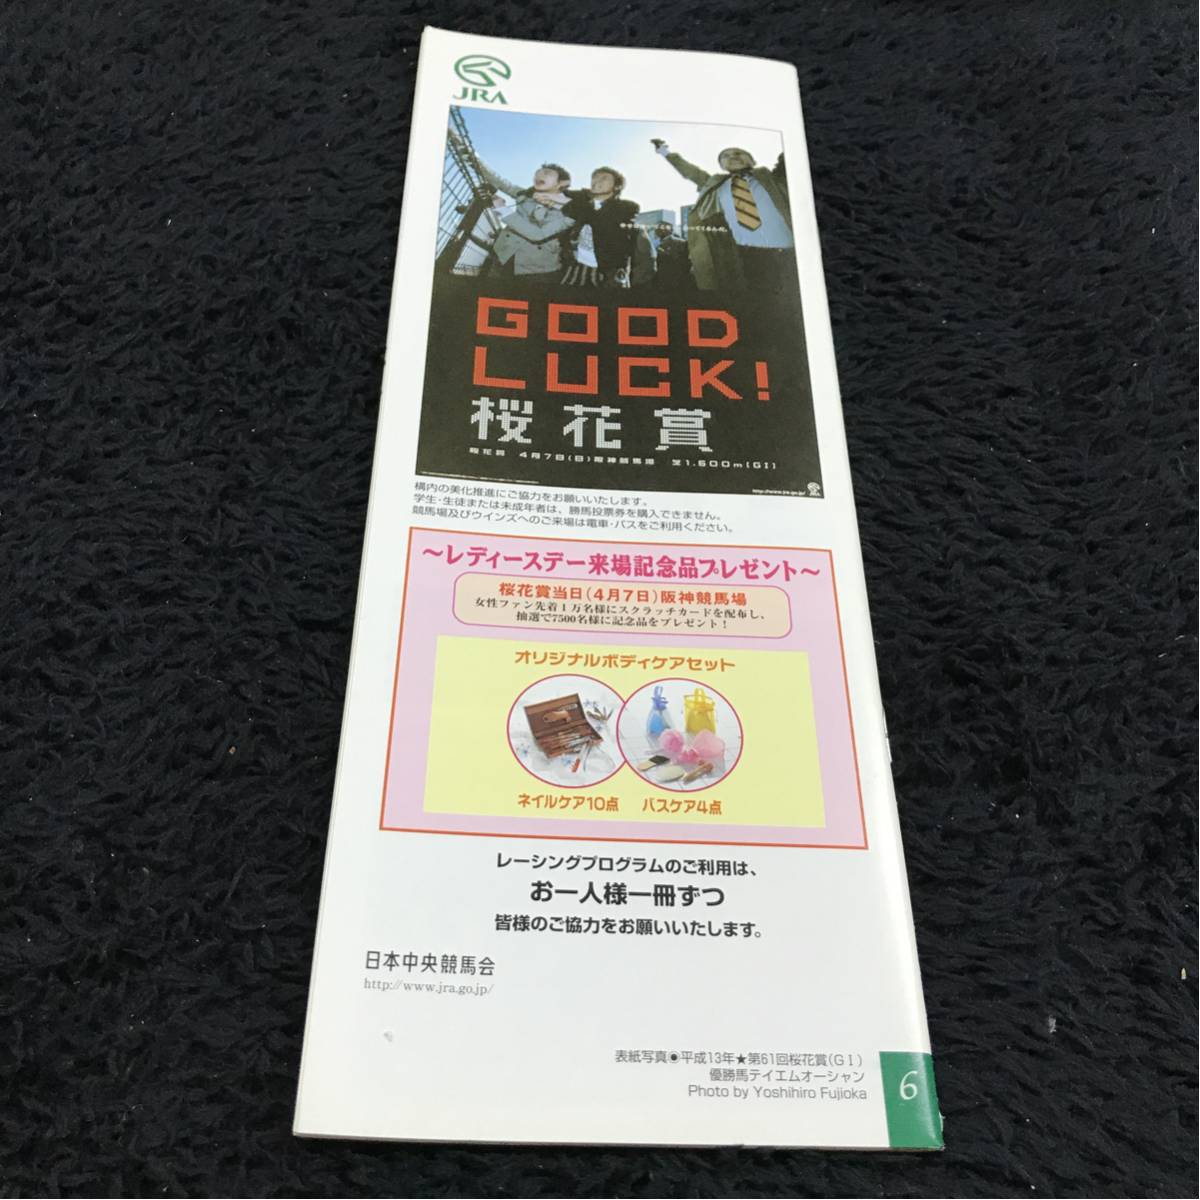 [JRAre- Pro ] no. 62 times Sakura flower . Racing Program (2002.4.7)| Hanshin horse racing place | cover * Tey M Ocean 